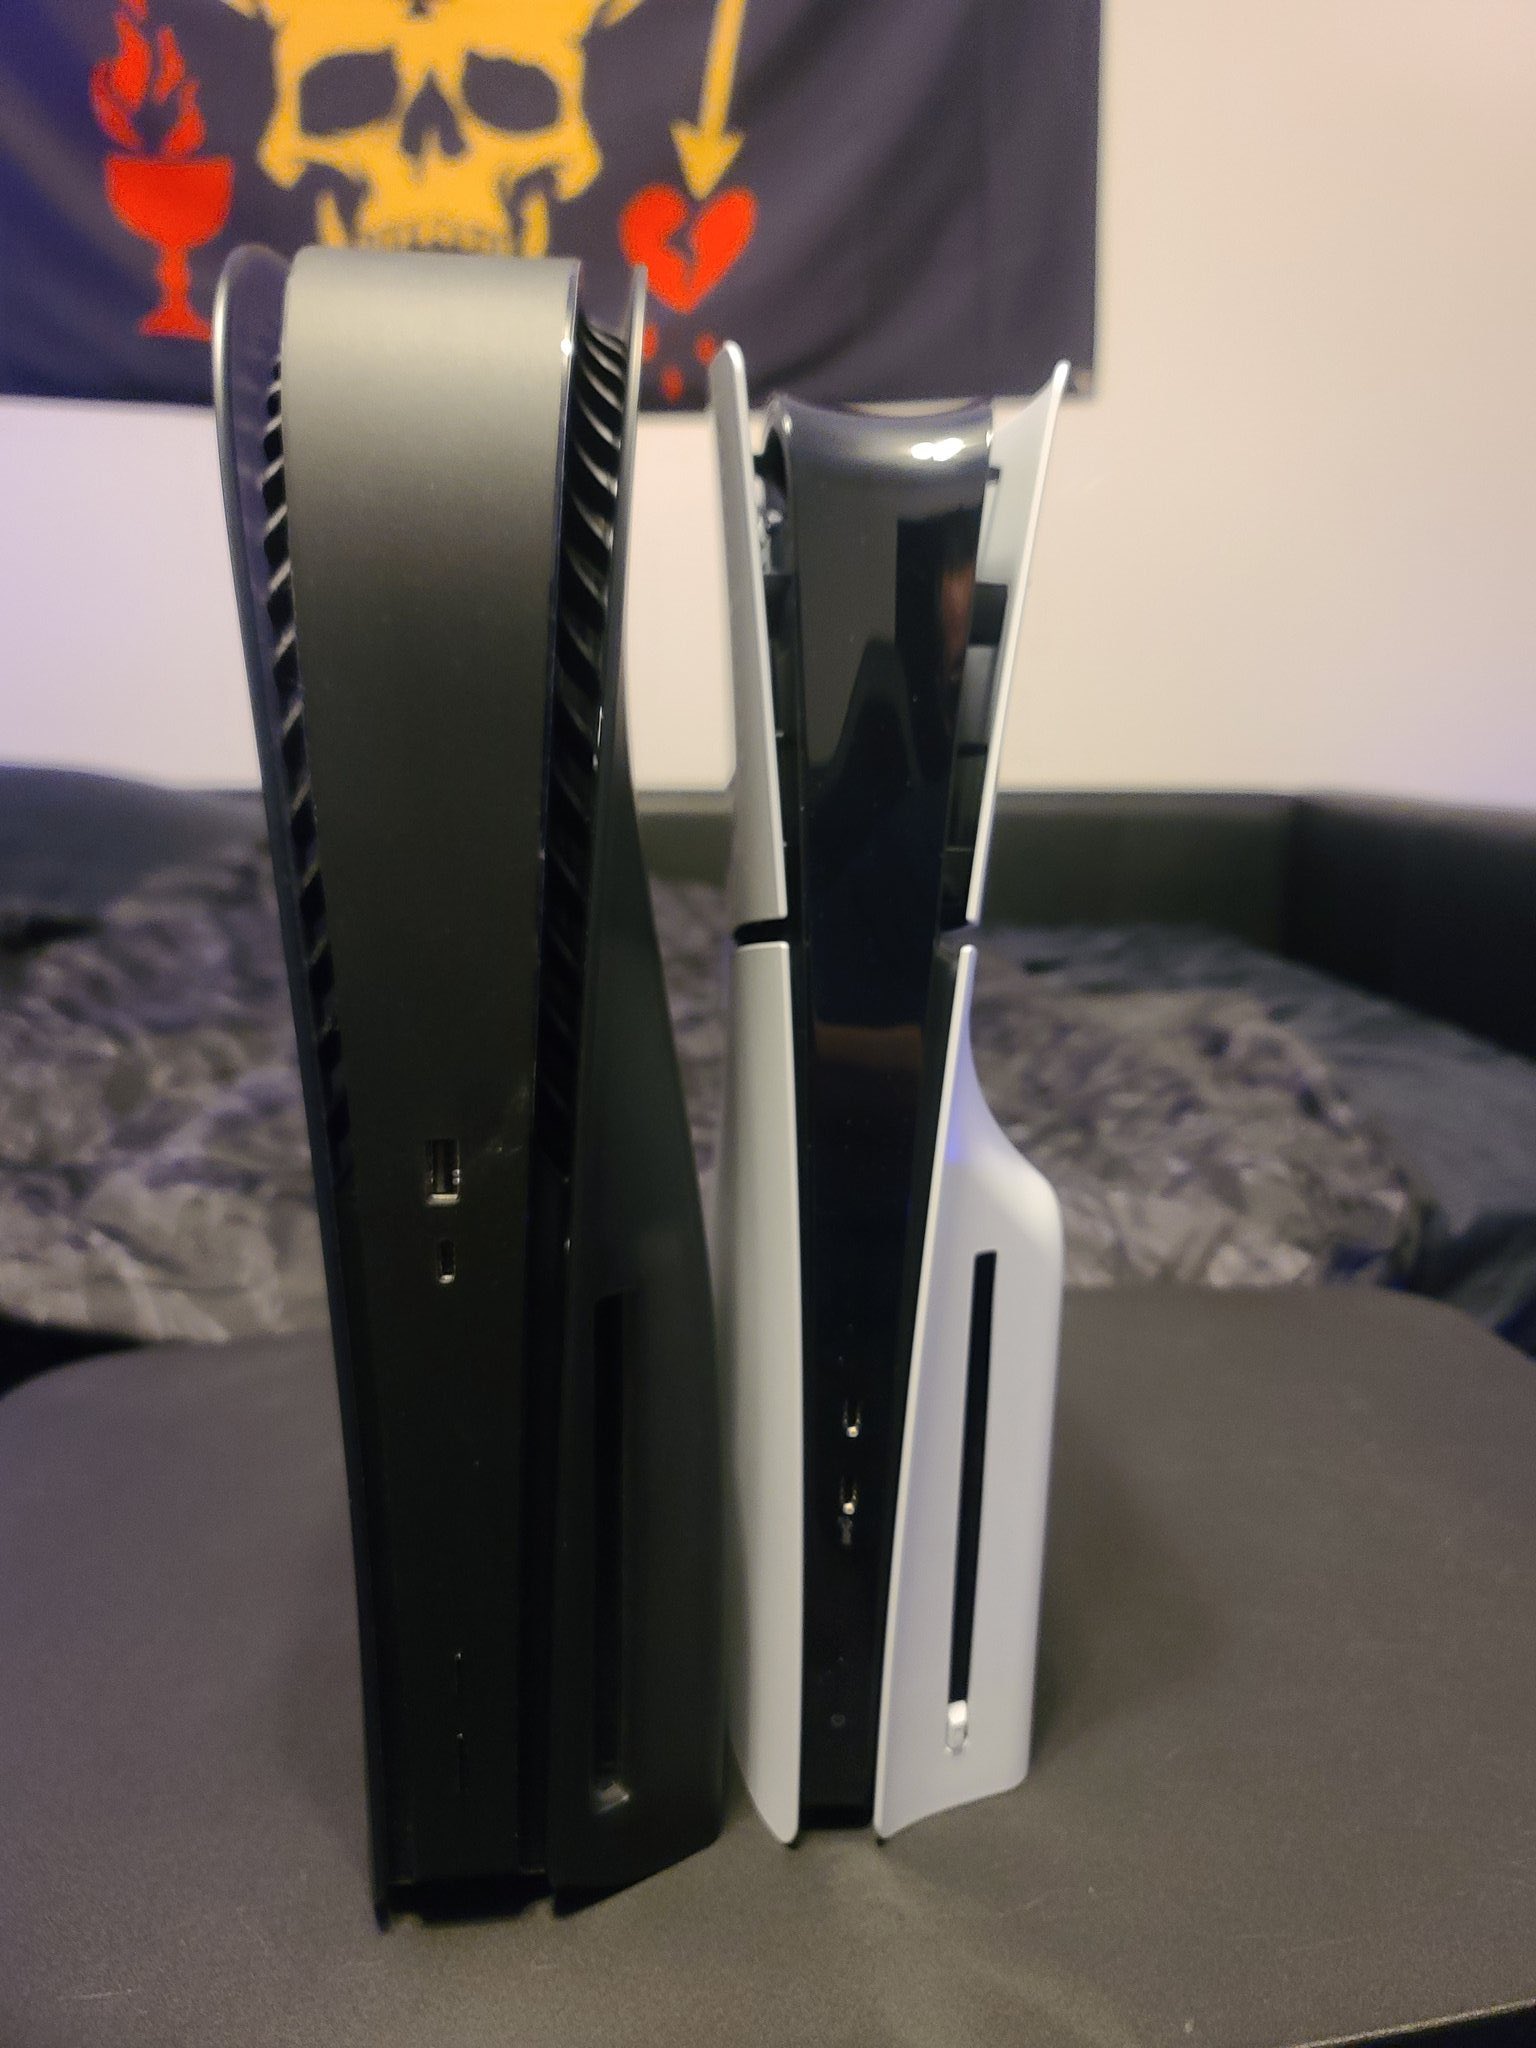 PS5 Slim vs PS5: Is the new PS5 Slim worth it? - Xfire